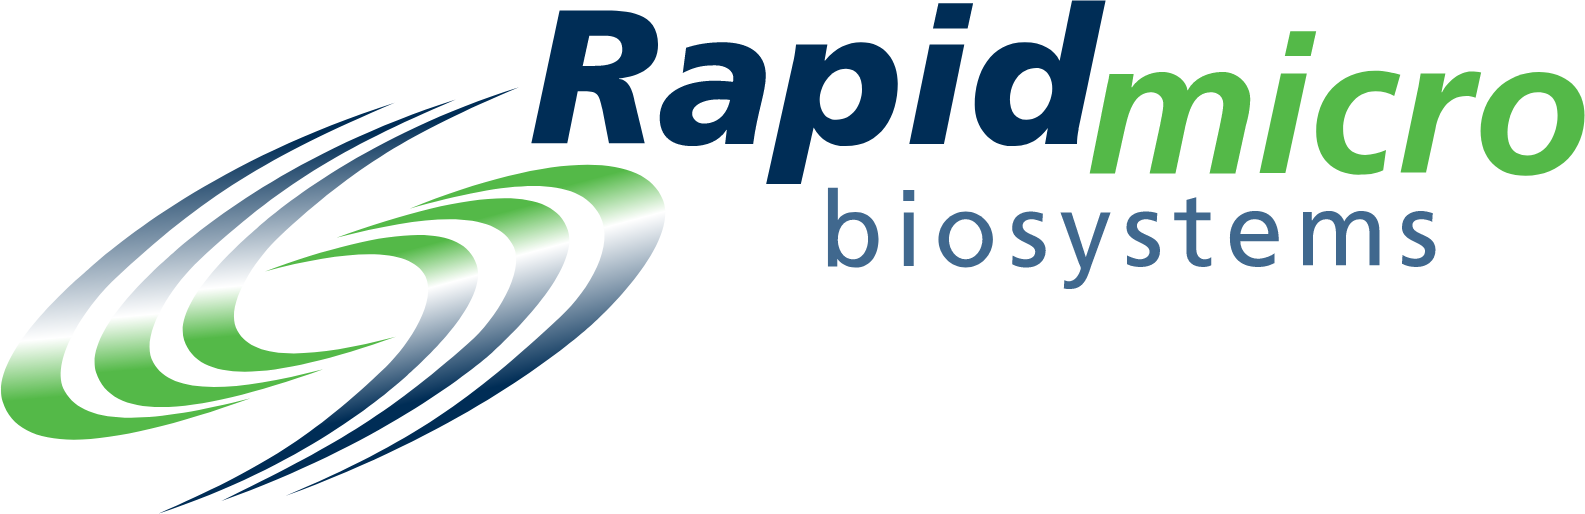 Rapid Micro Biosystems logo large (transparent PNG)